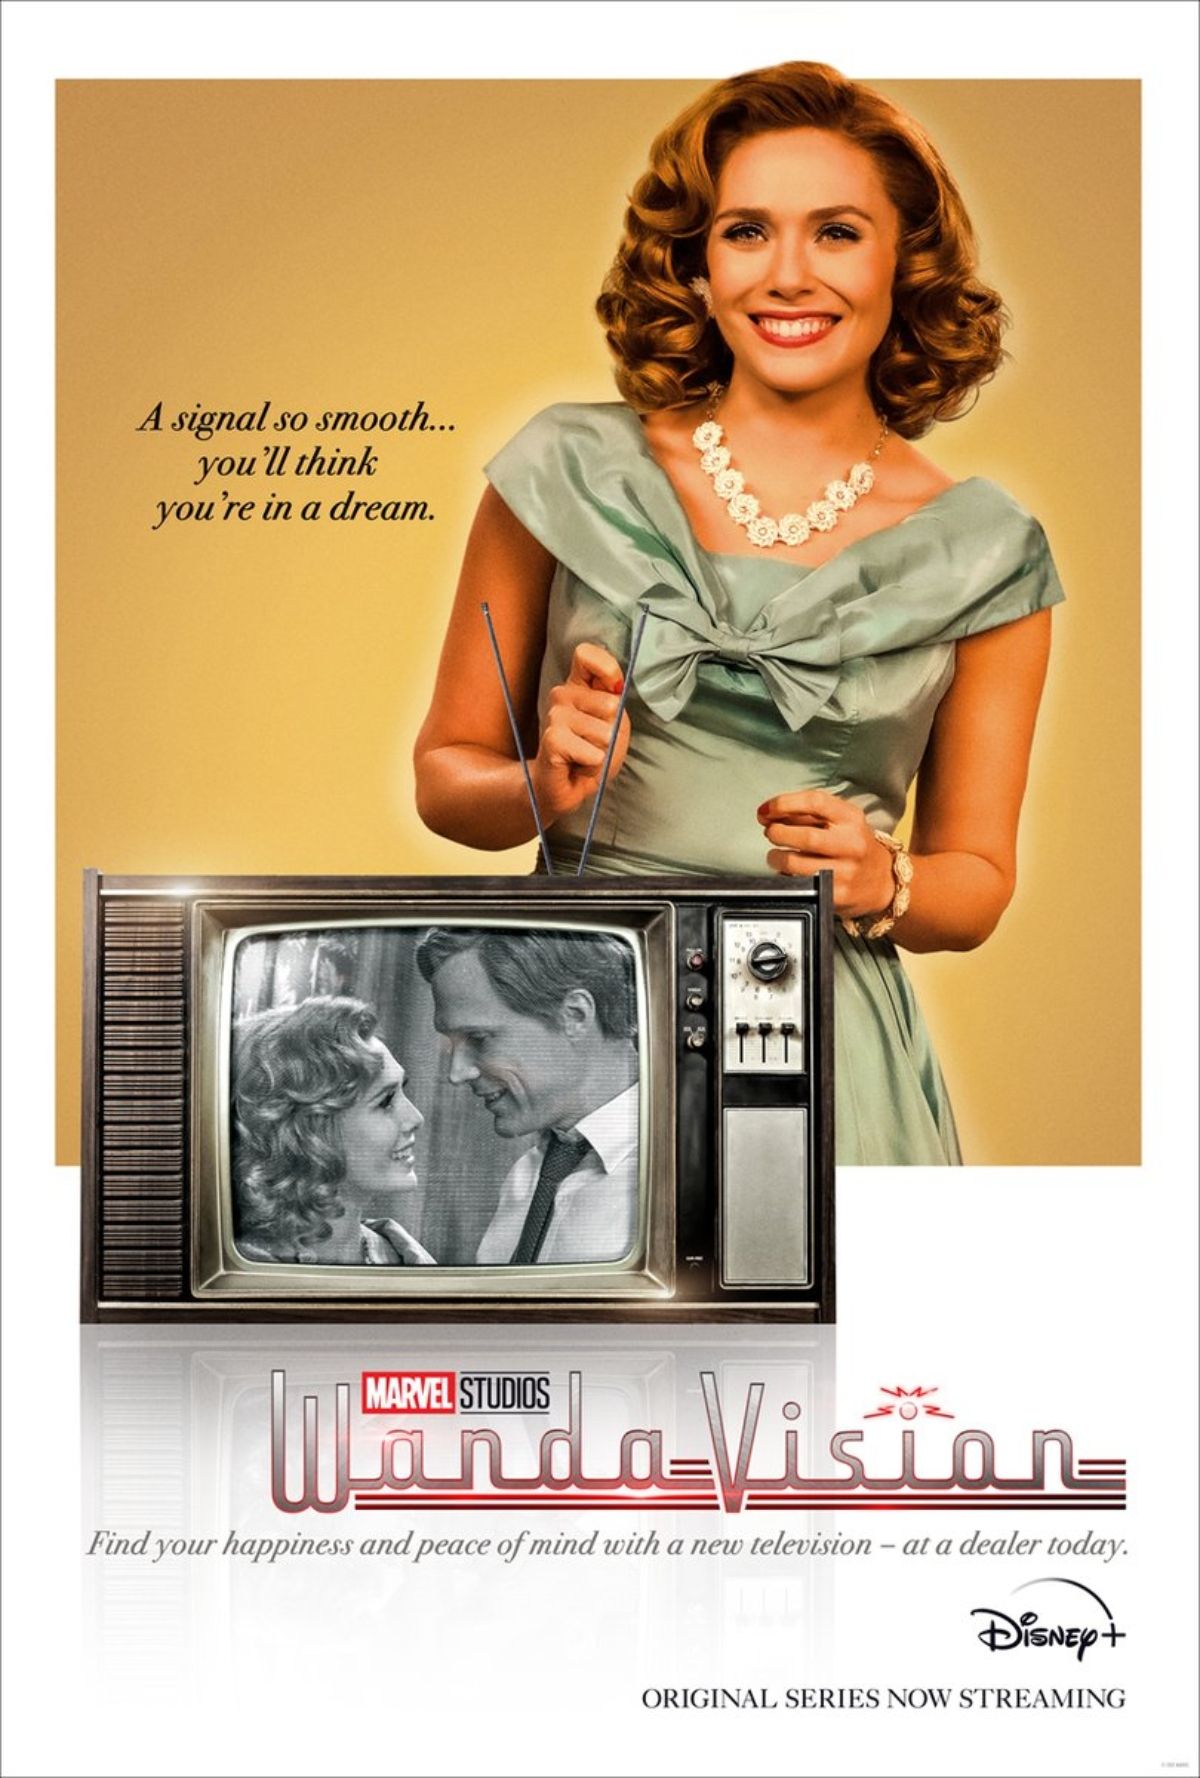 WandaVision Poster Featuring Elizabeth Olsen